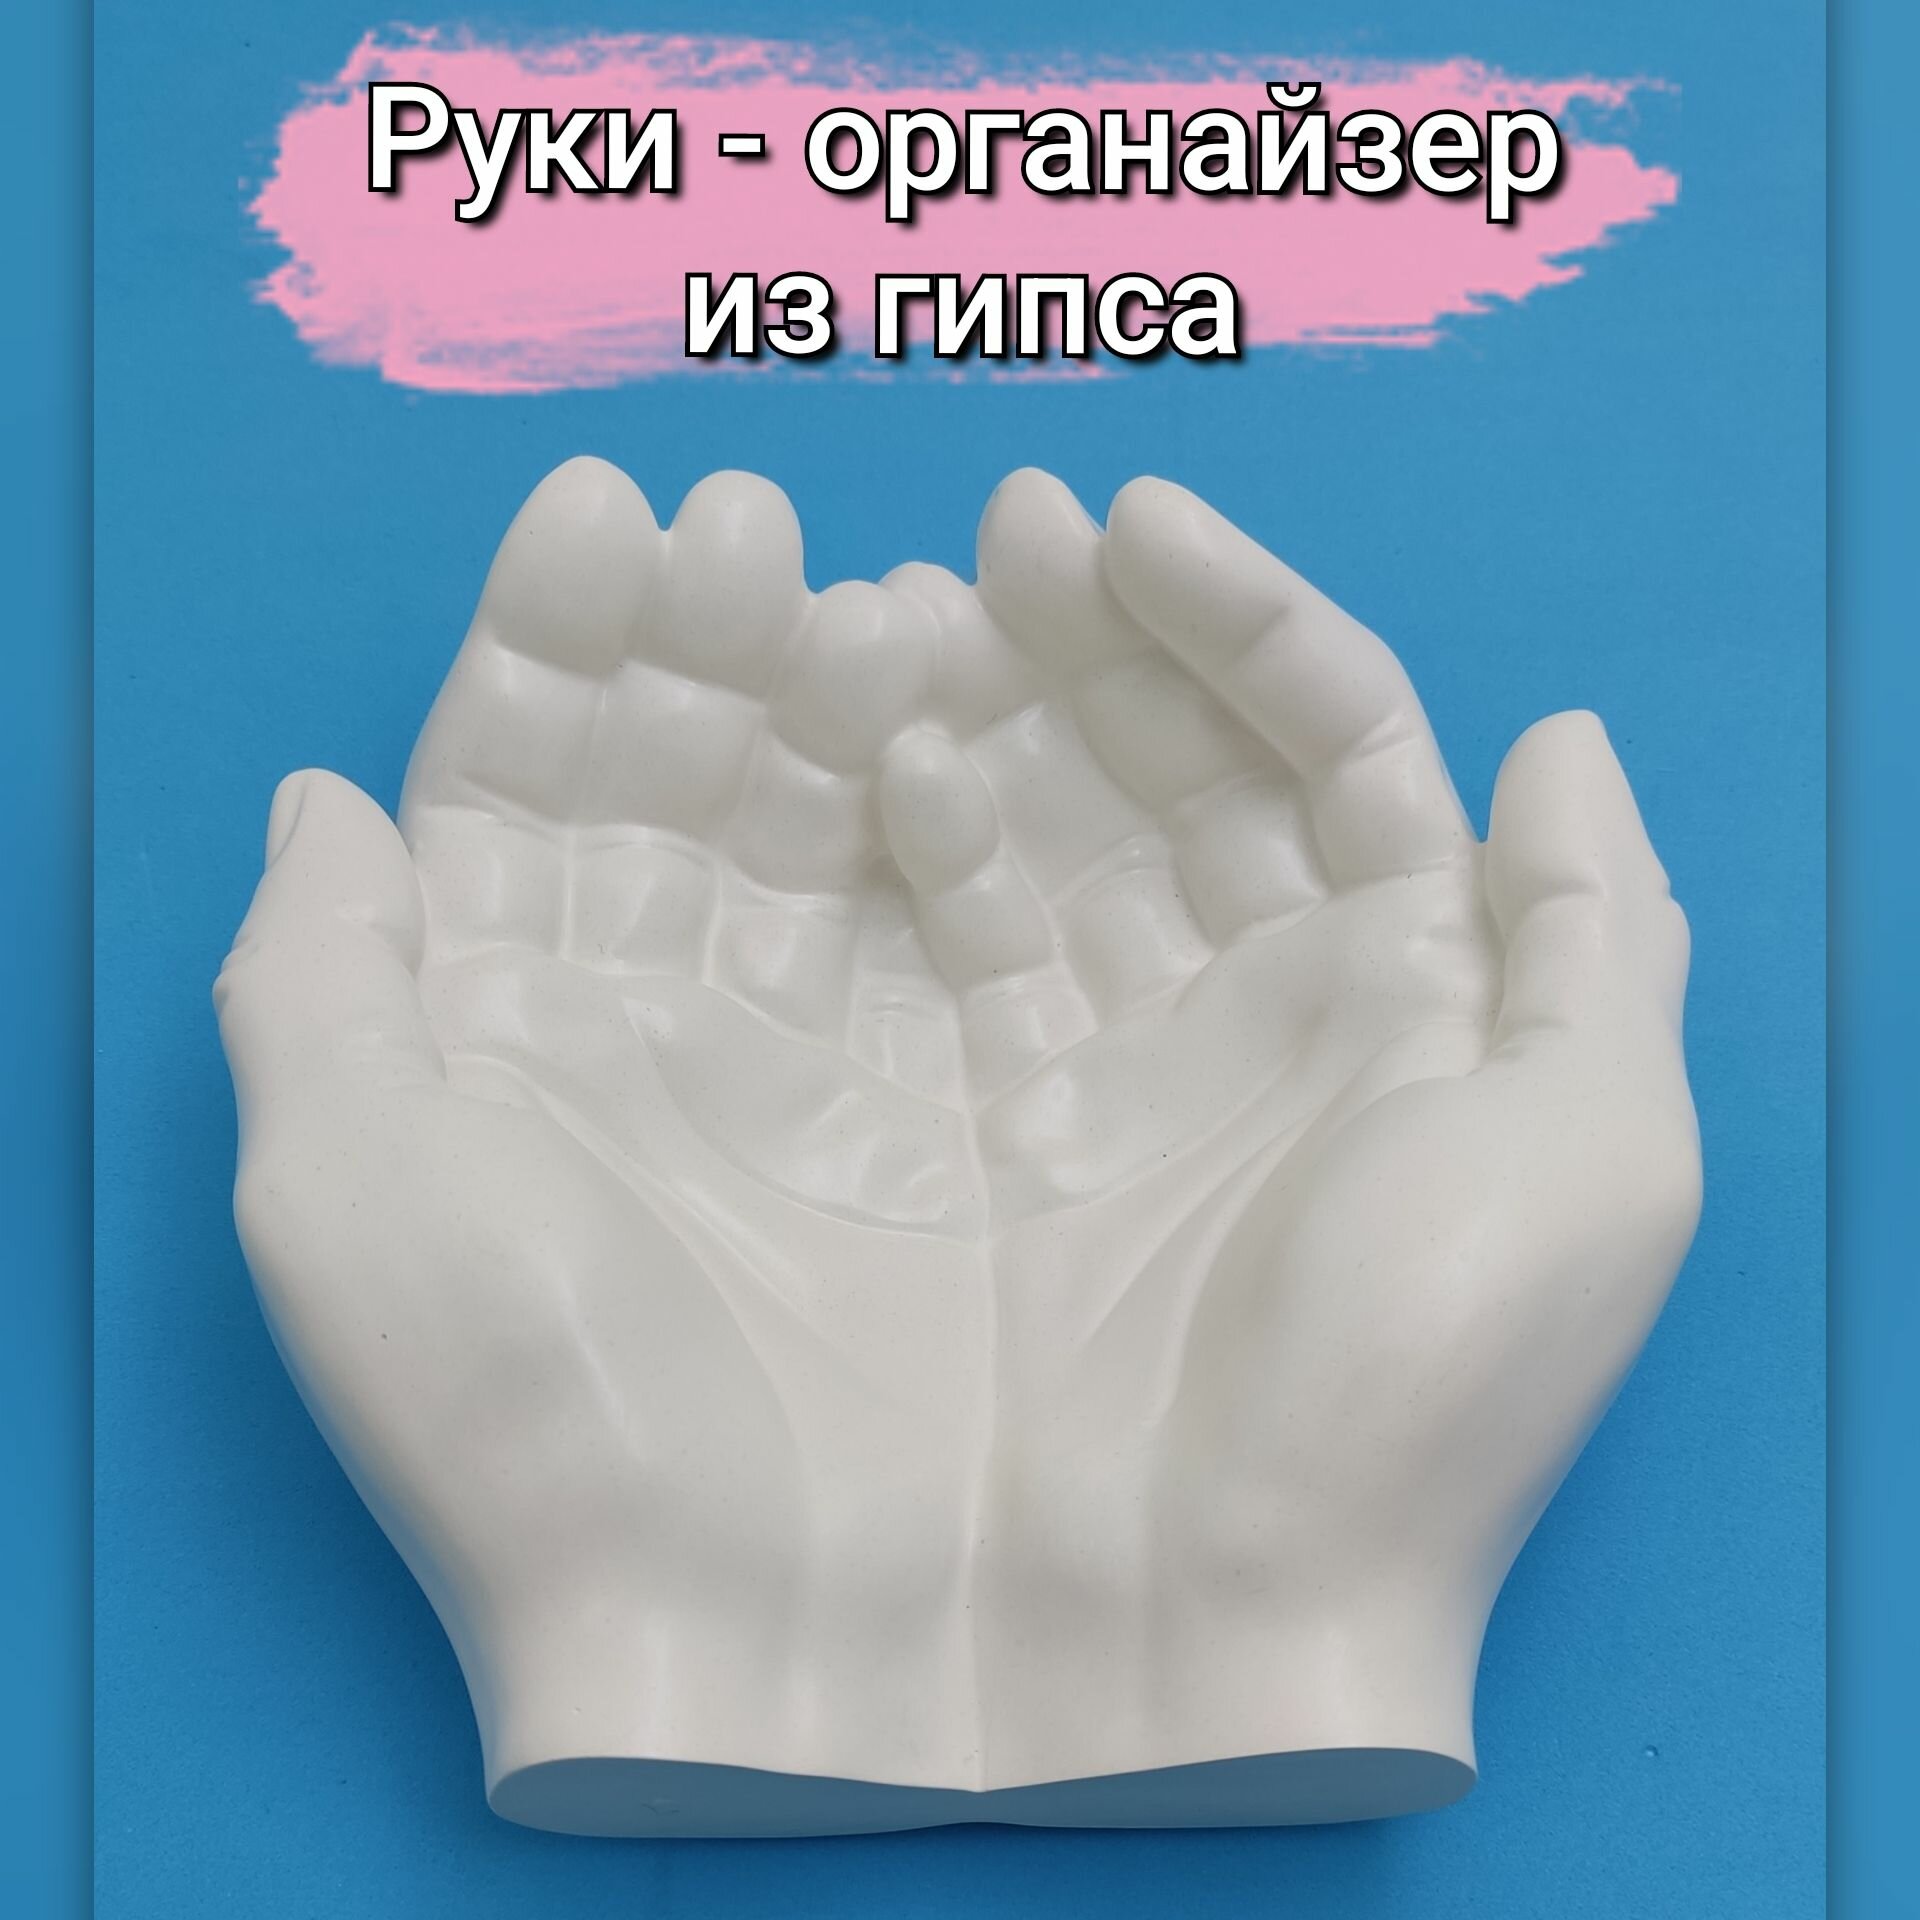 Статуэтка Руки белые - органайзер